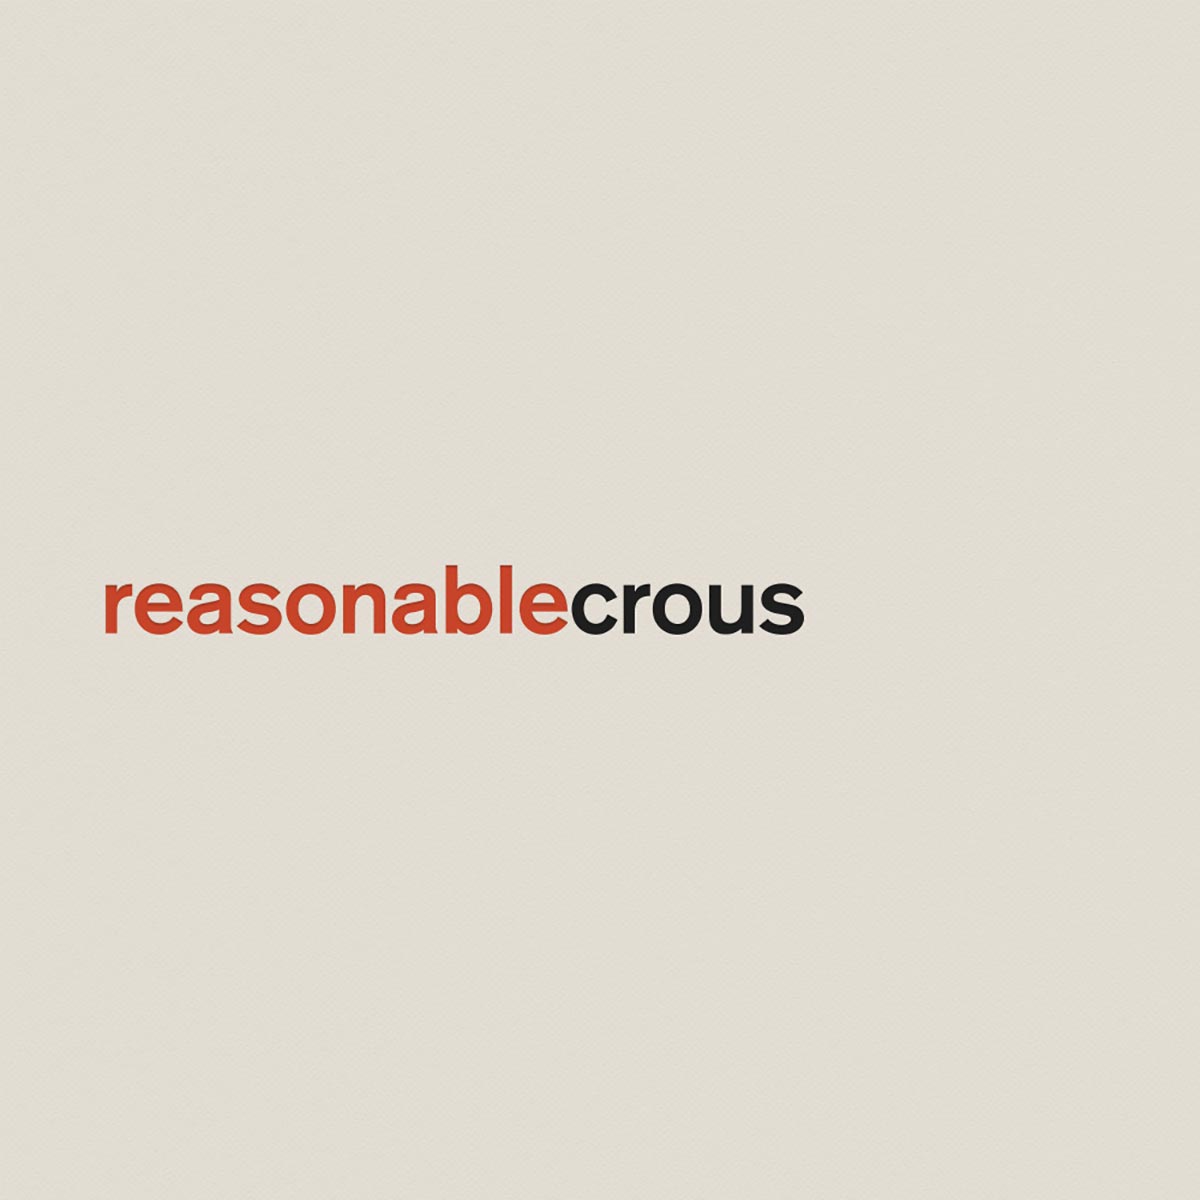 reasonablecrous